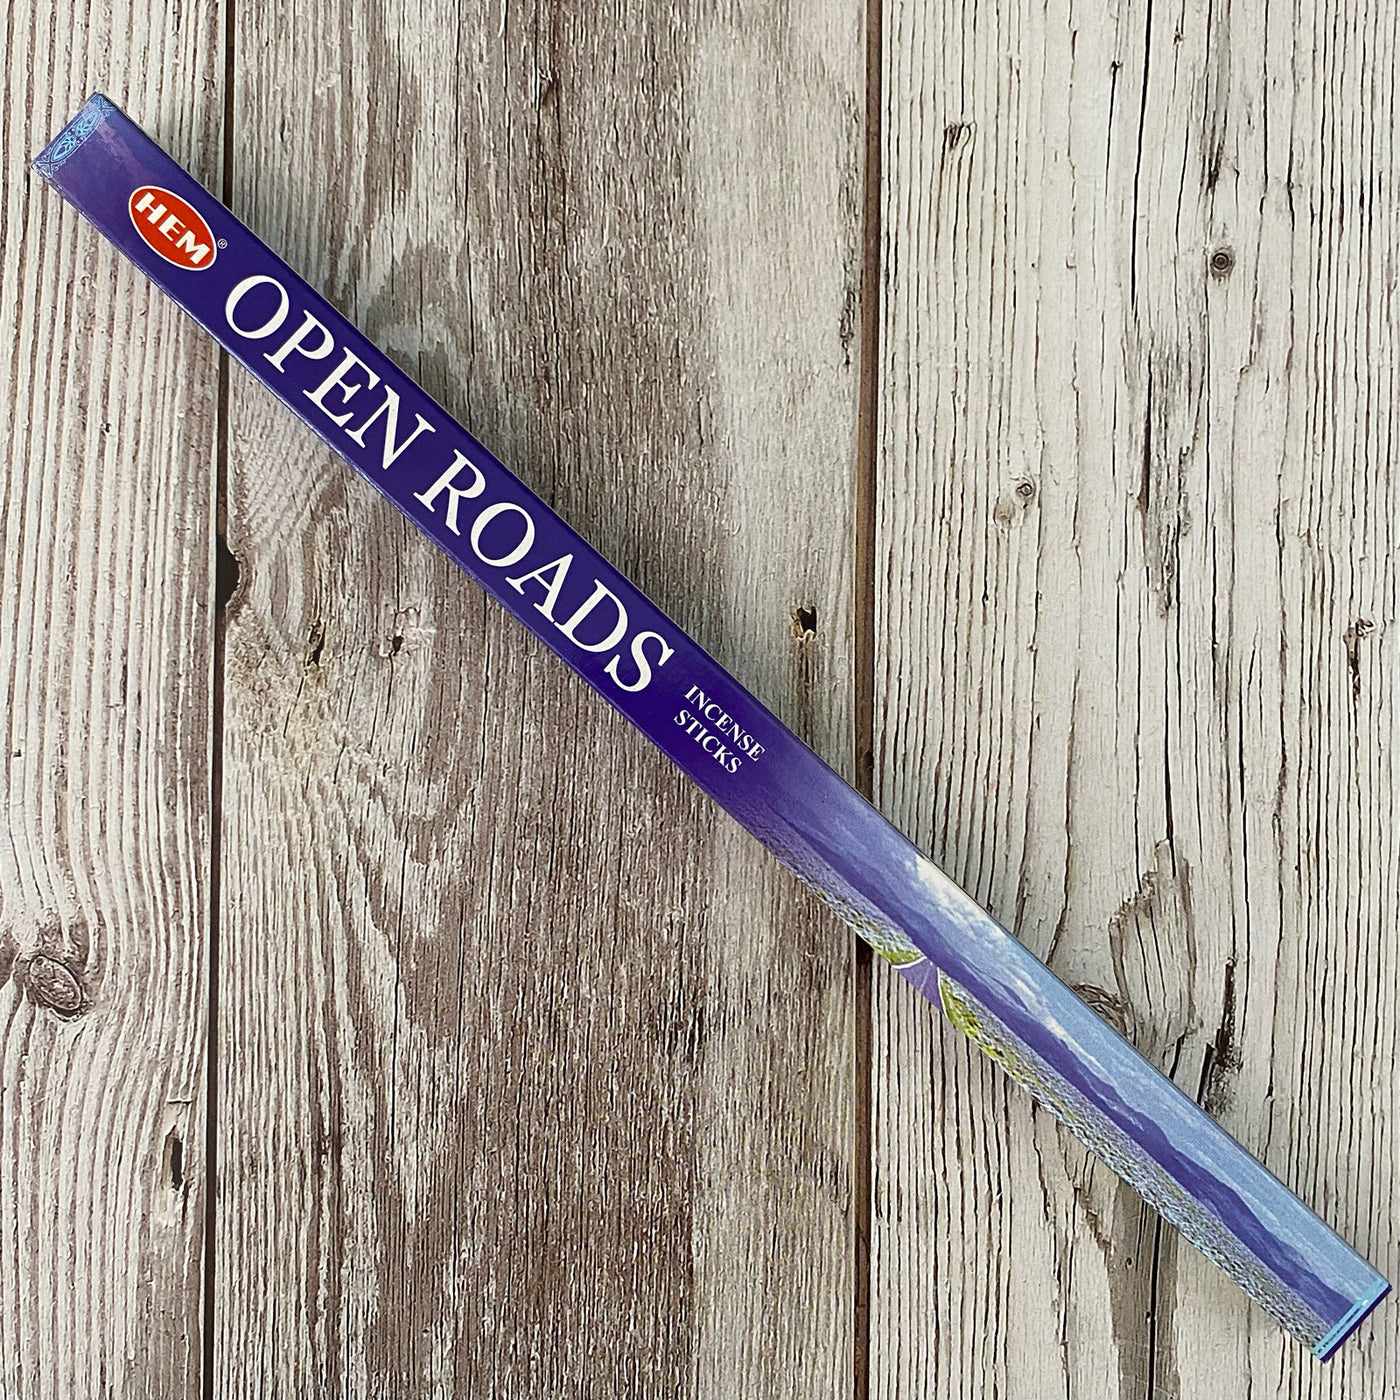 HEM Open Roads - Stick Incense (8 gram)